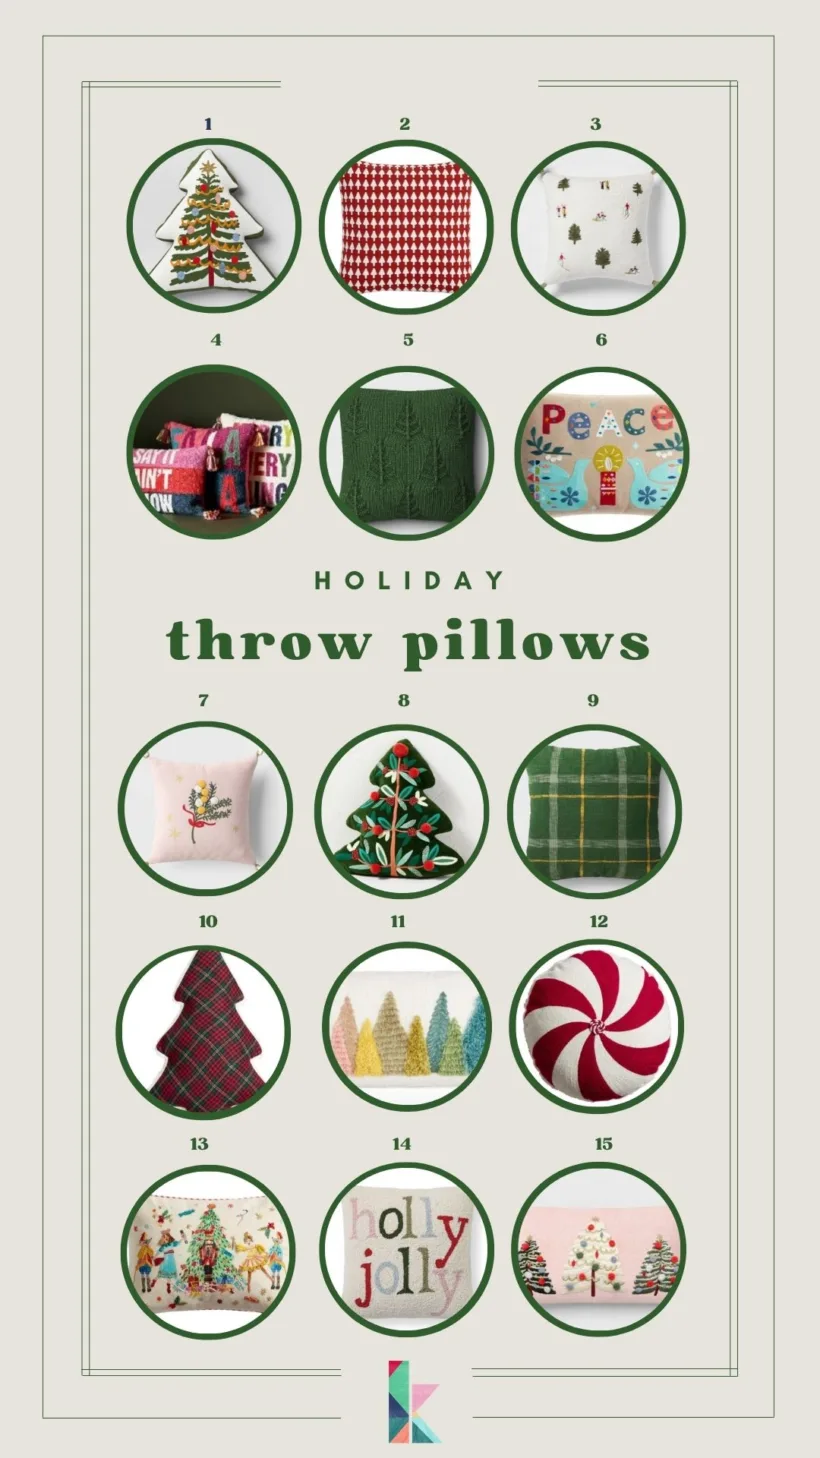 2022 holiday throw pillows